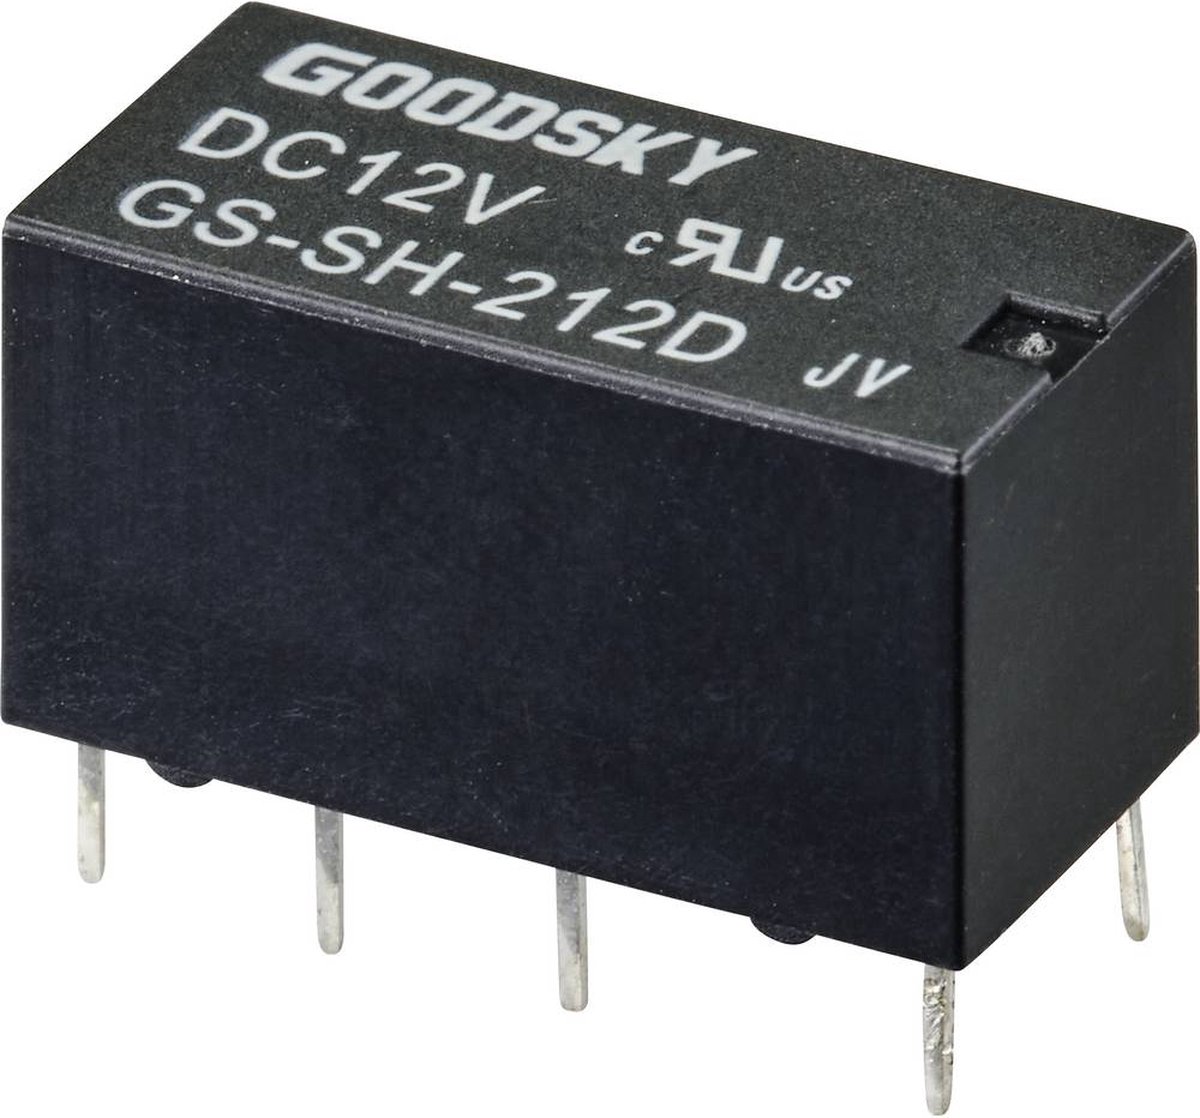 GoodSky GS-SH-212D Printrelais 12 V/DC 2 A 2x wisselcontact 1 stuk(s) Tube